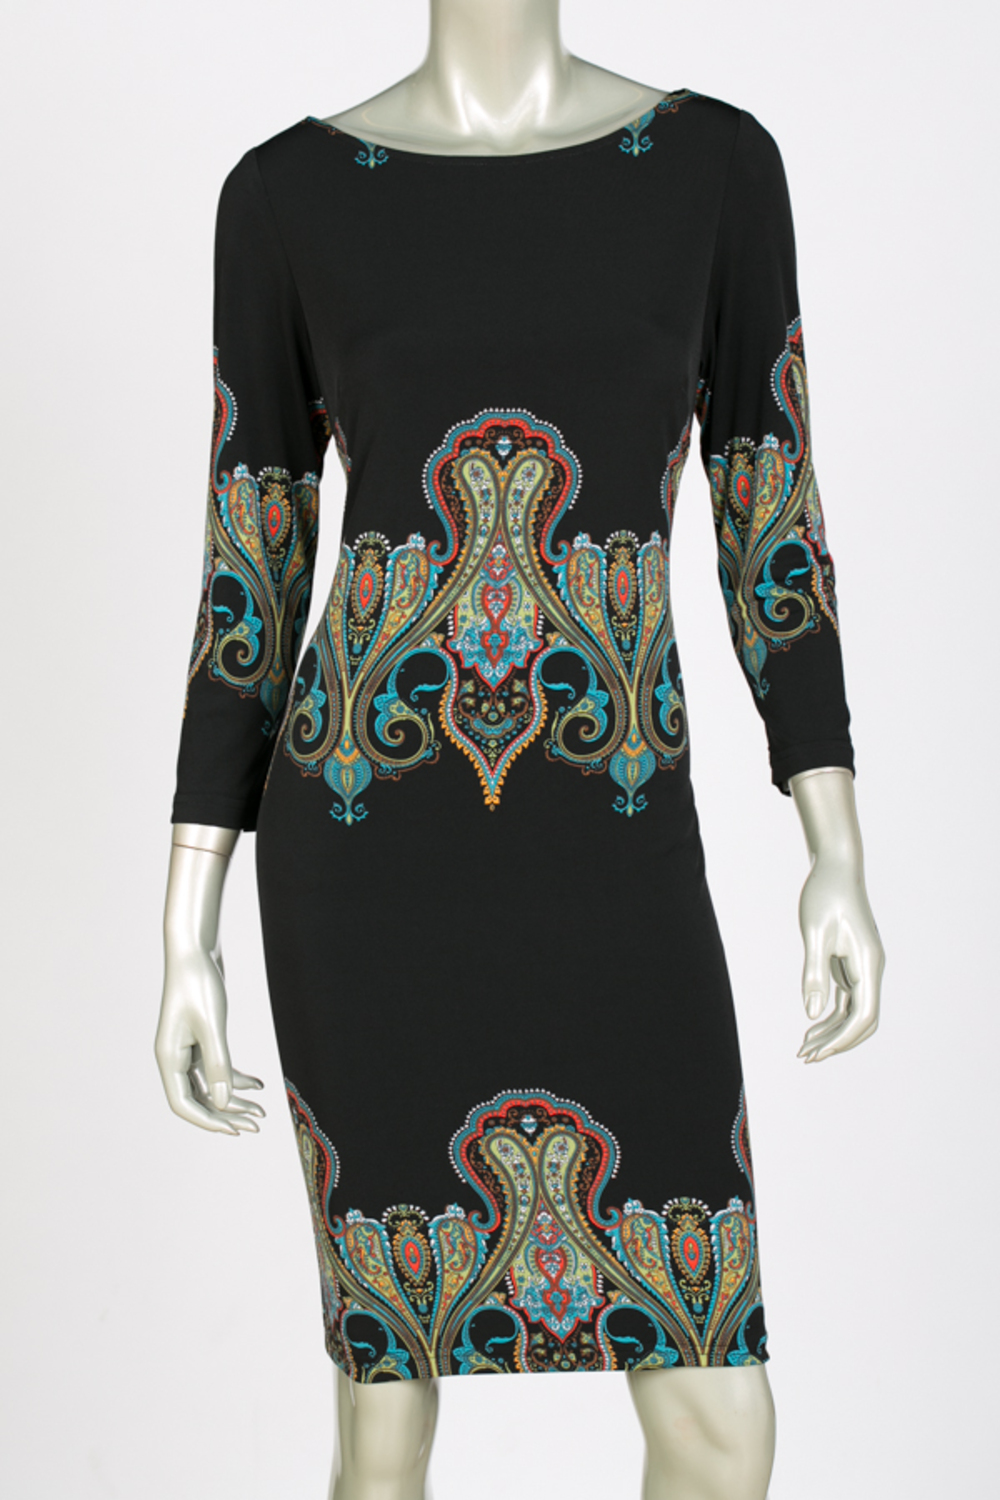 Joseph Ribkoff dress style 144736. Black/multi